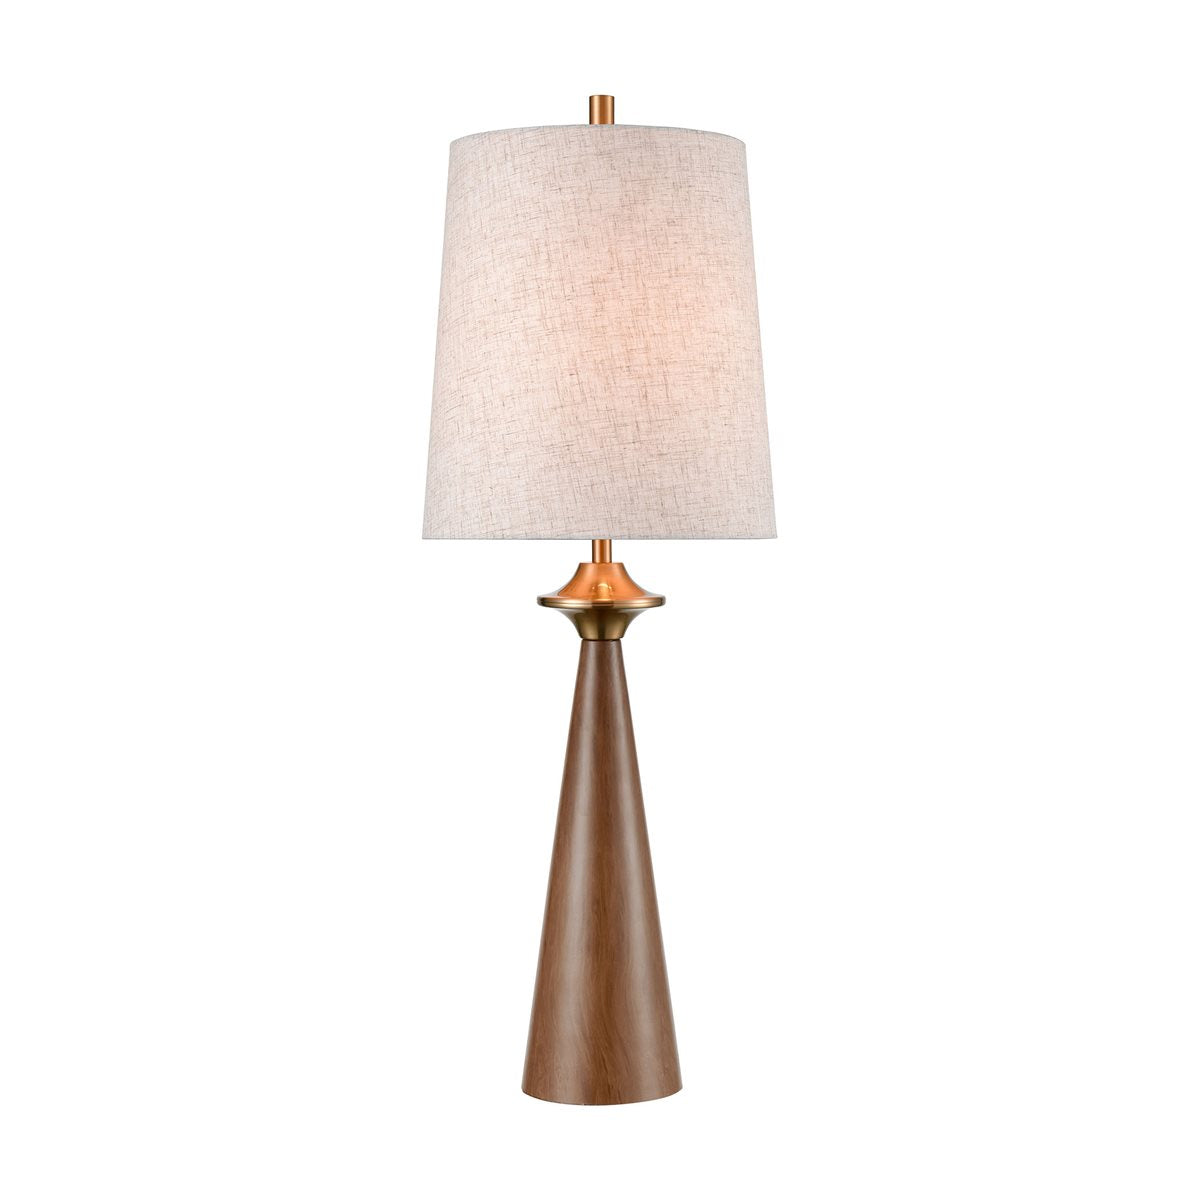 Stein World Stissing Table Lamp 77201